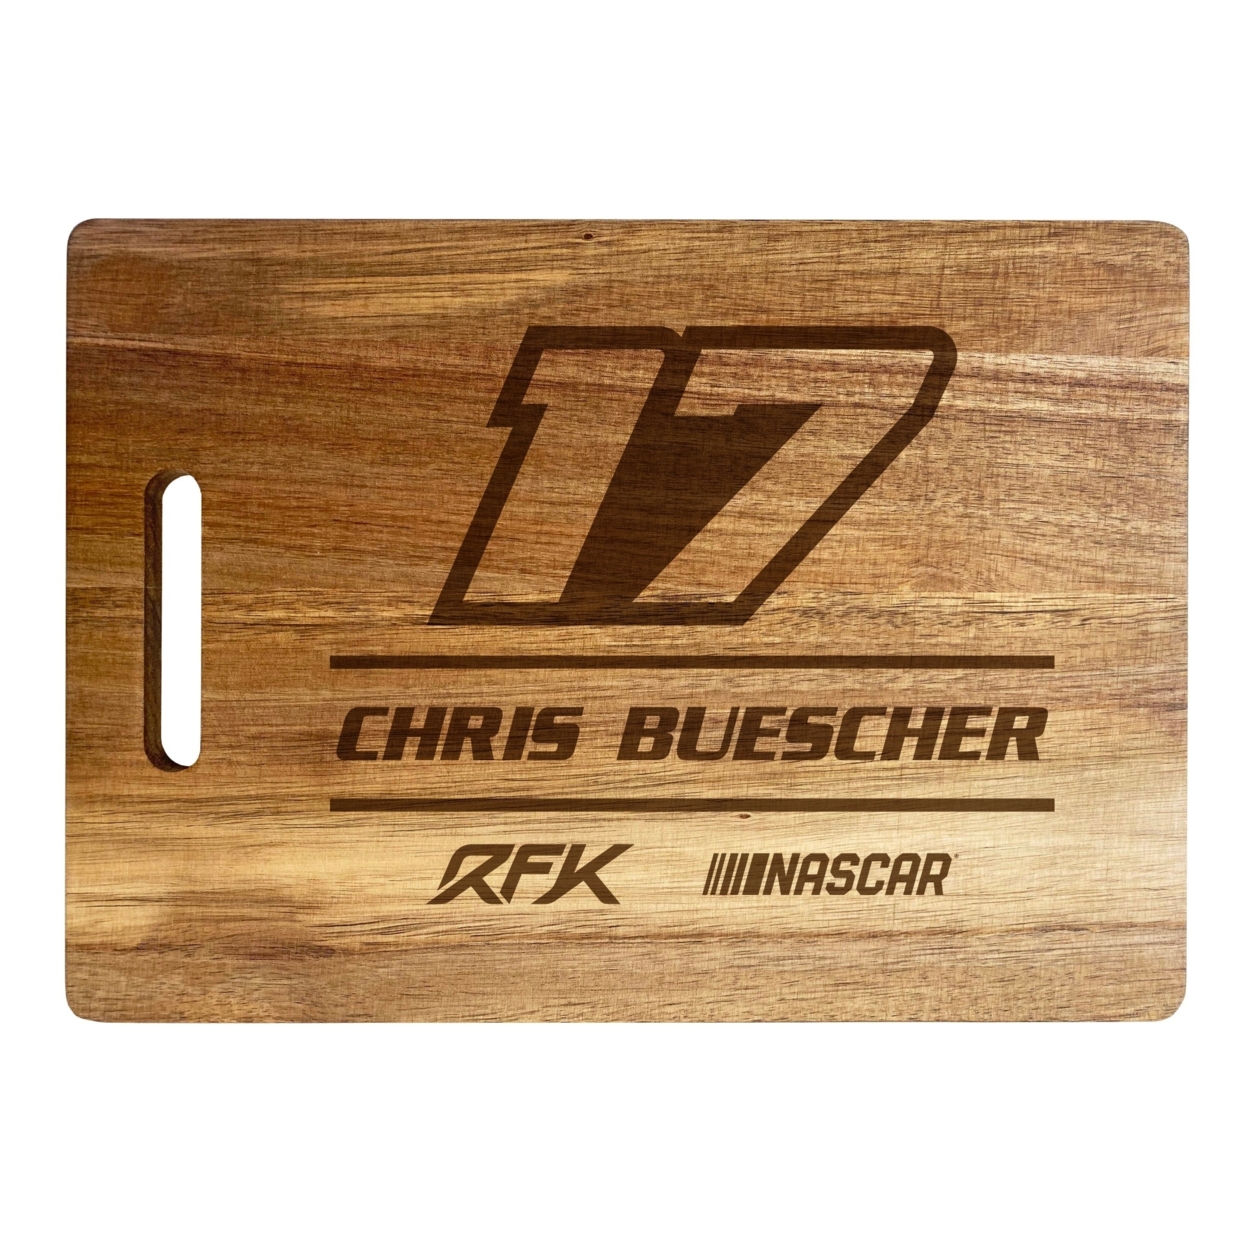 #17 Chris Buescher NASCAR Officially Licensed Engraved Wooden Cutting Board